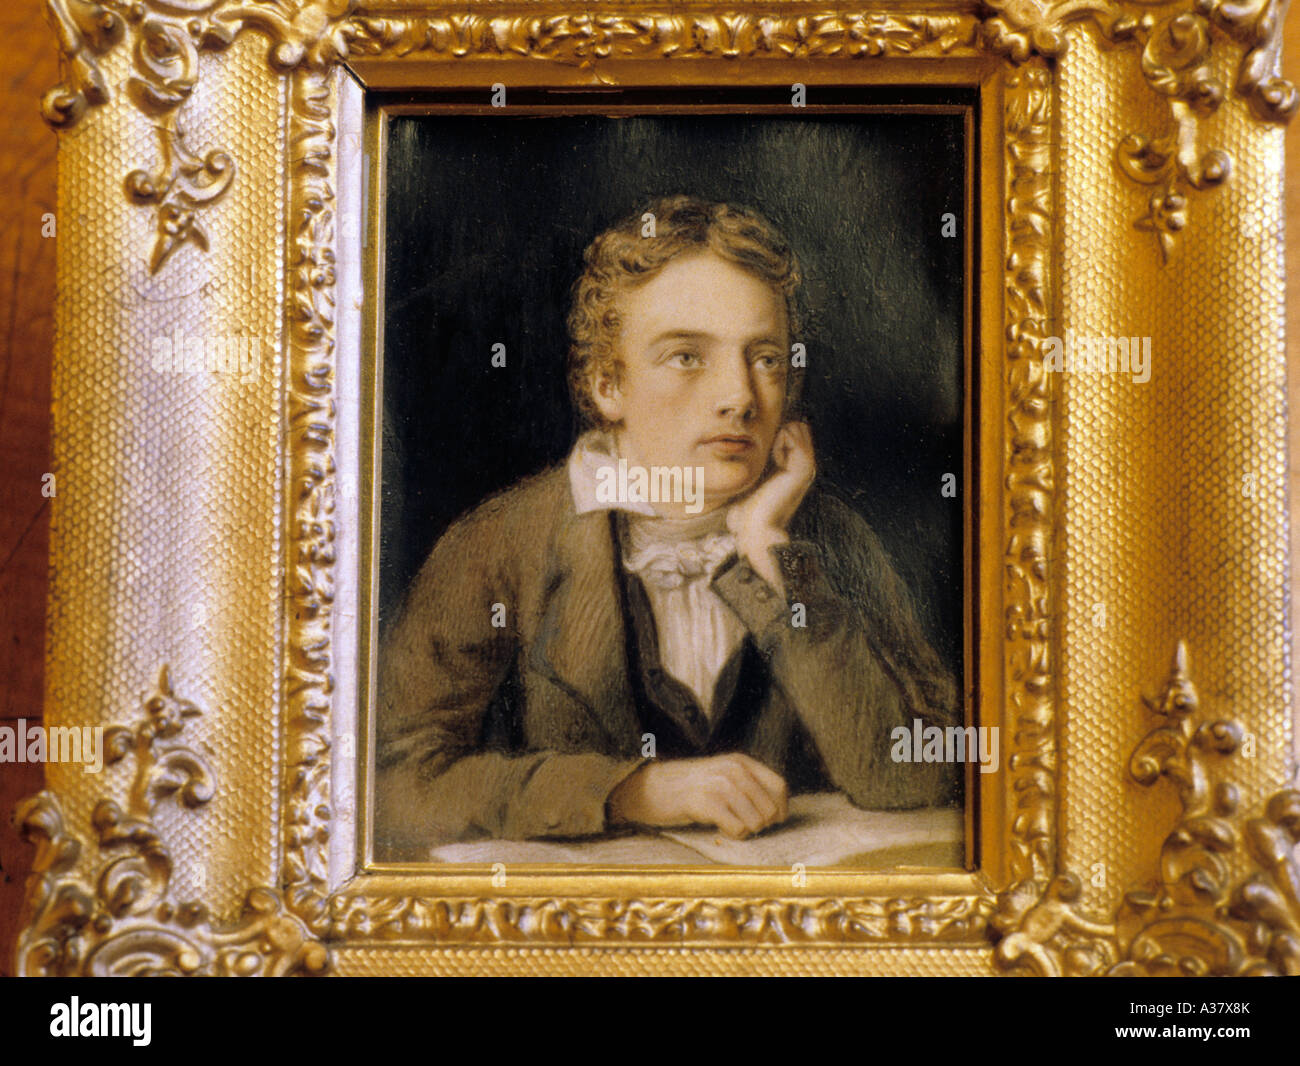 John Keats, romantischen Dichter, englische Literatur, Porträt von Joseph Severn, Hampstead, Malerei, London, England, UK Stockfoto